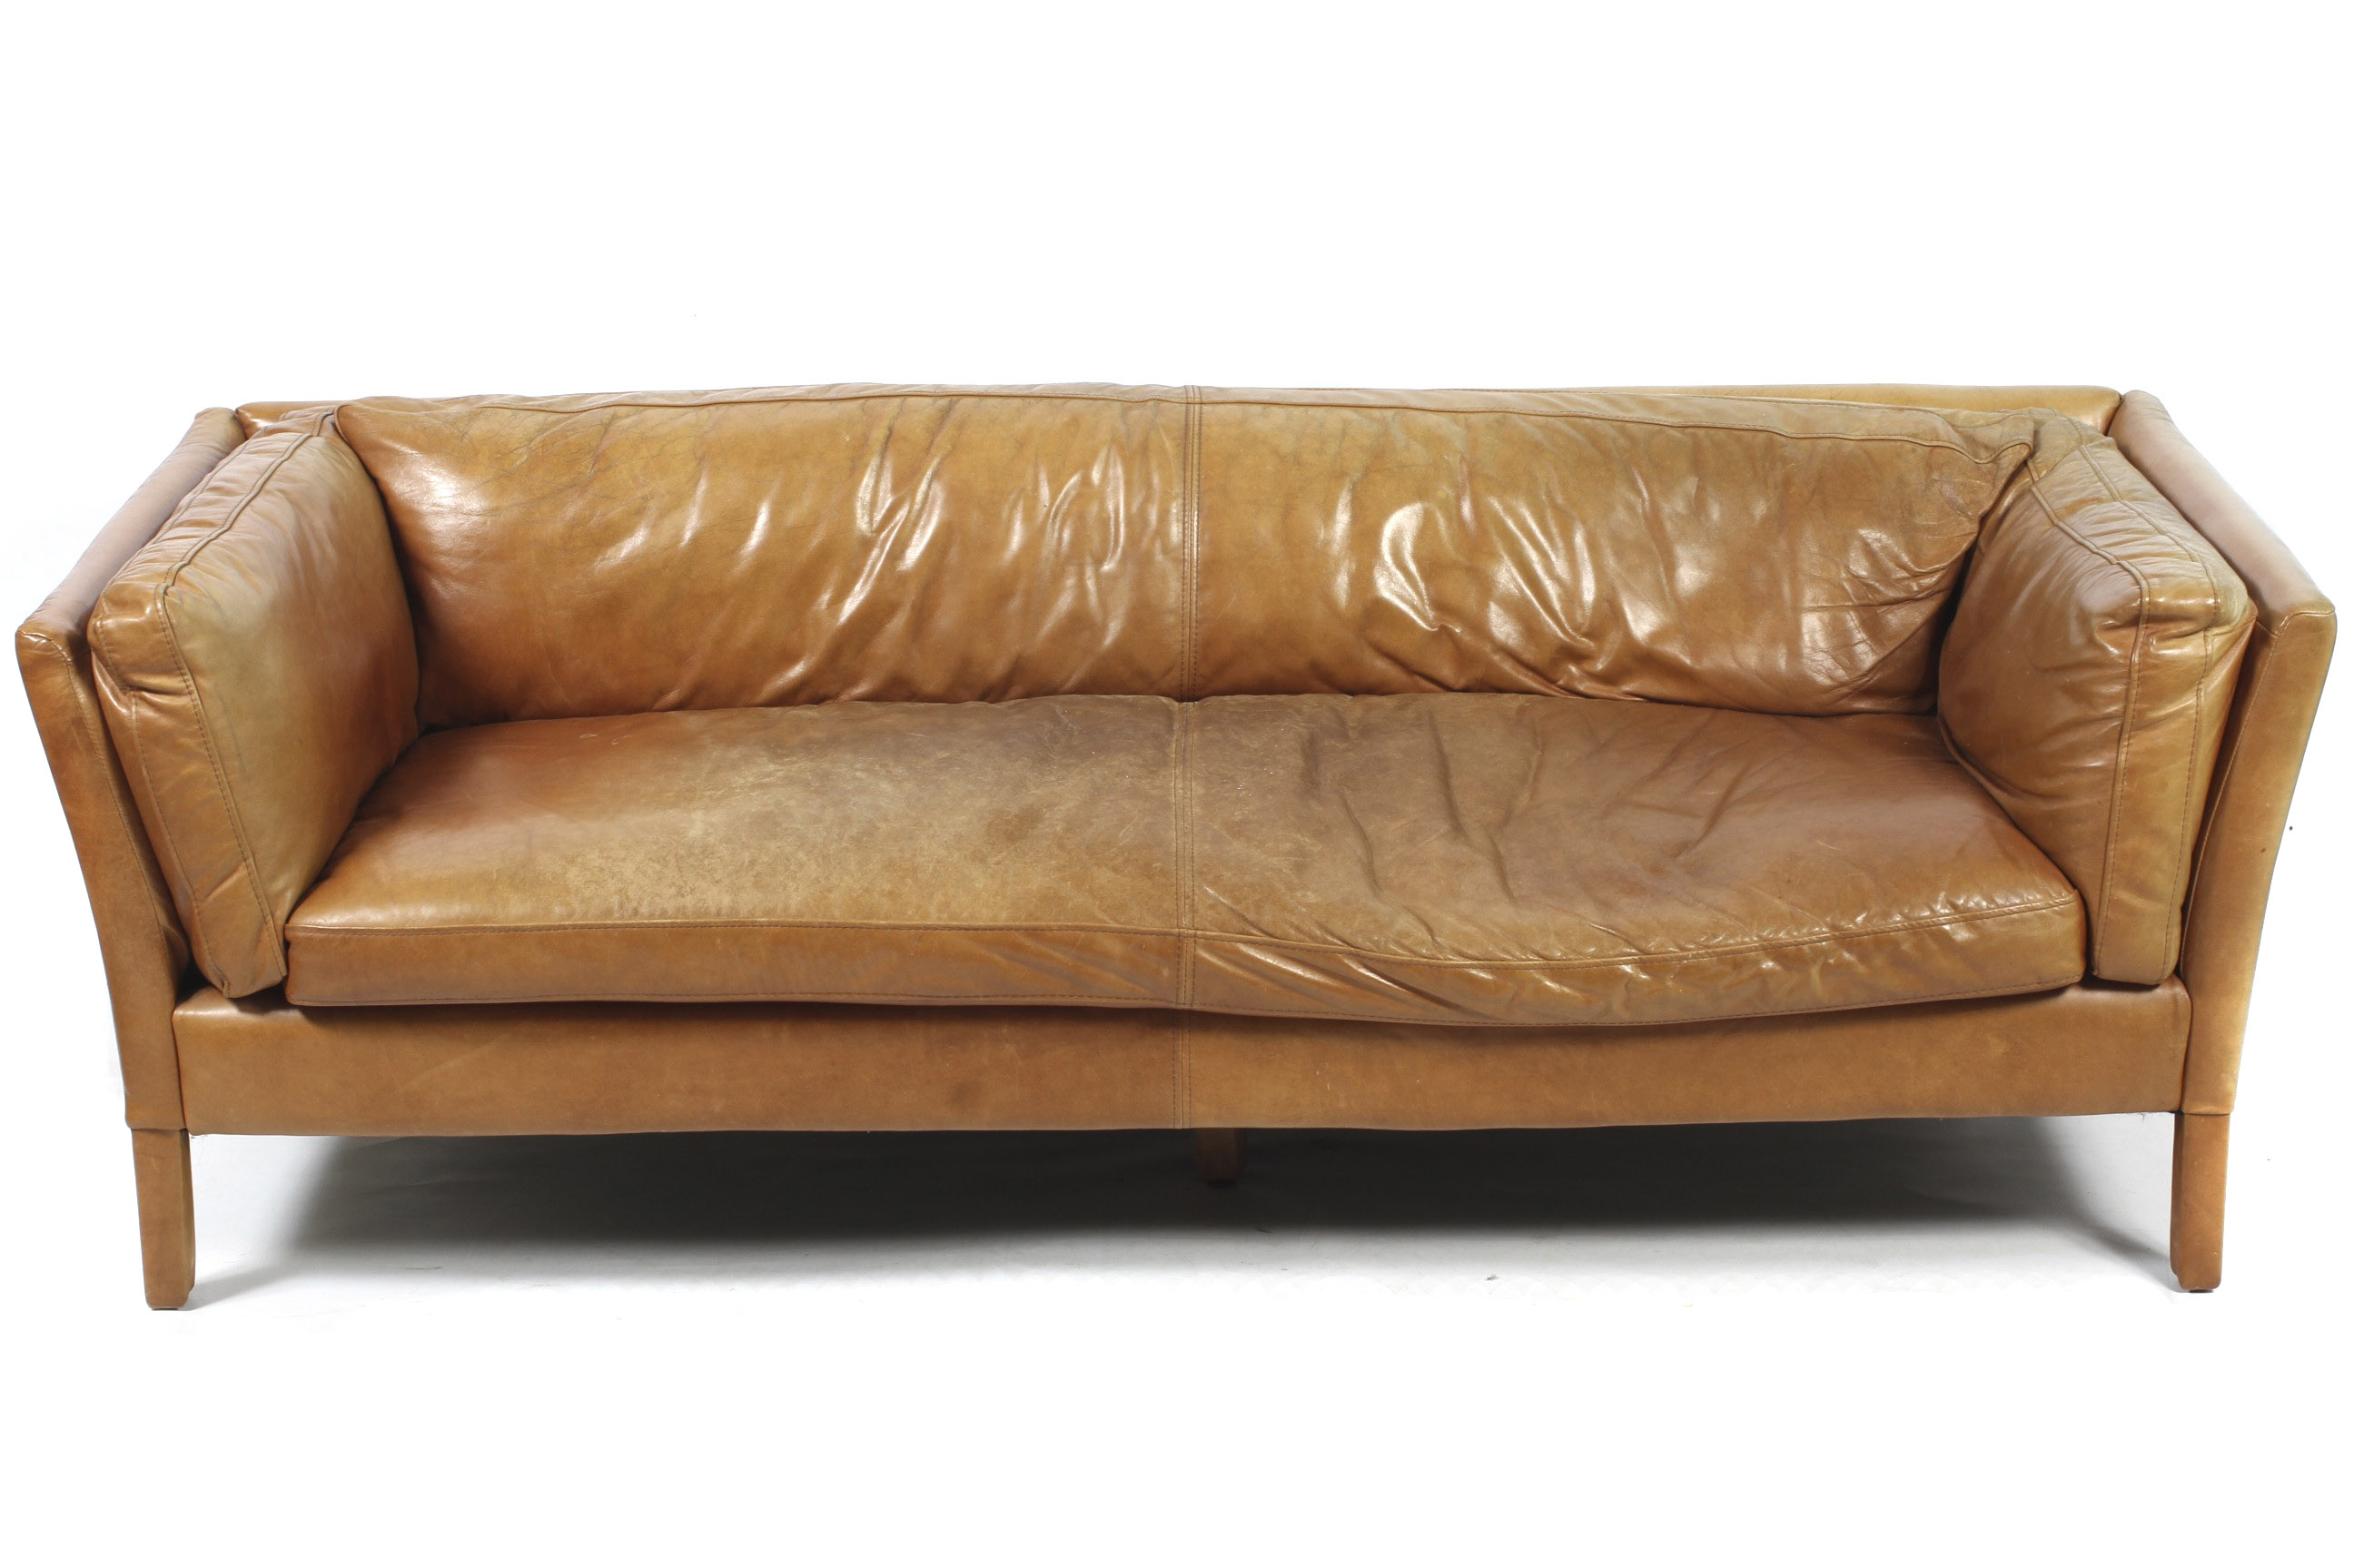 A contemporary John Lewis Scandinavian style tan leather three-seater sofa.